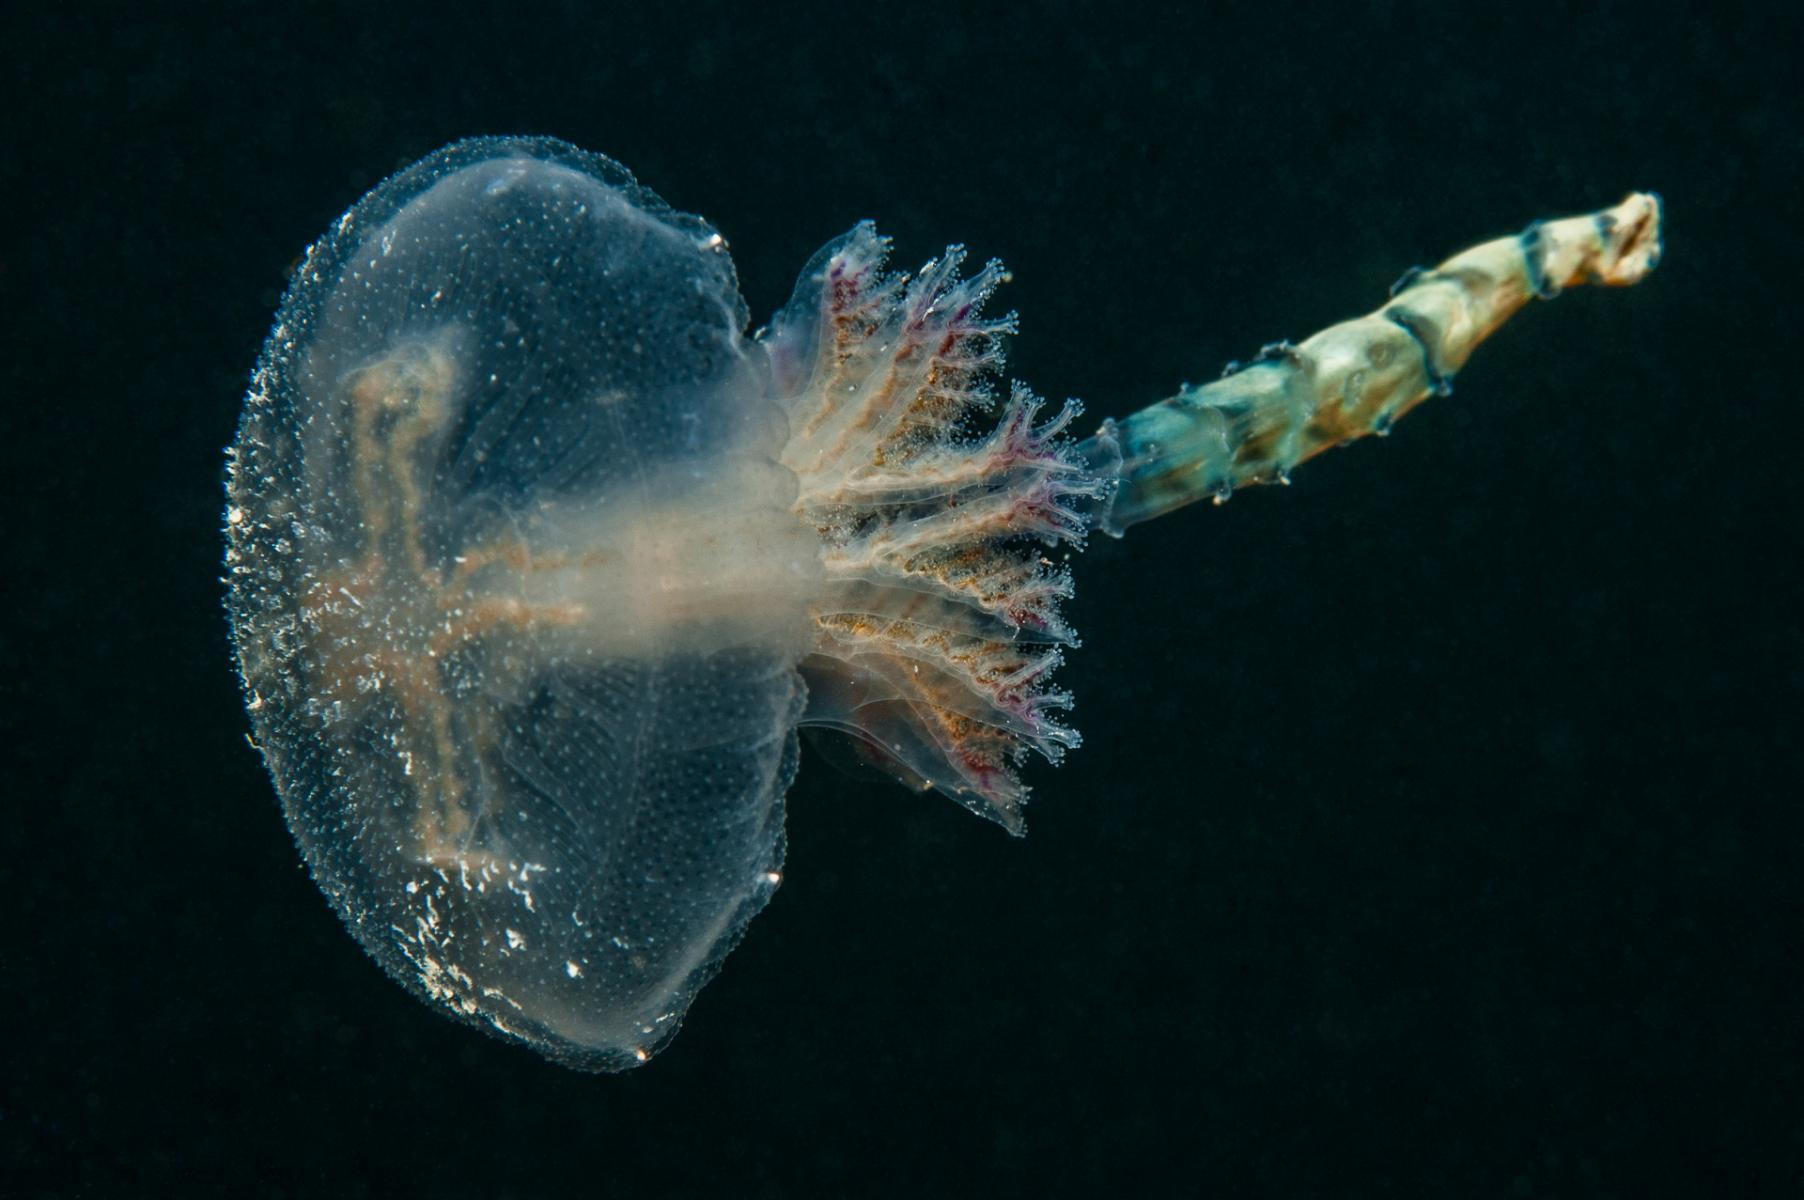 Pseudorhiza haeckeli: haekel's jellyfish